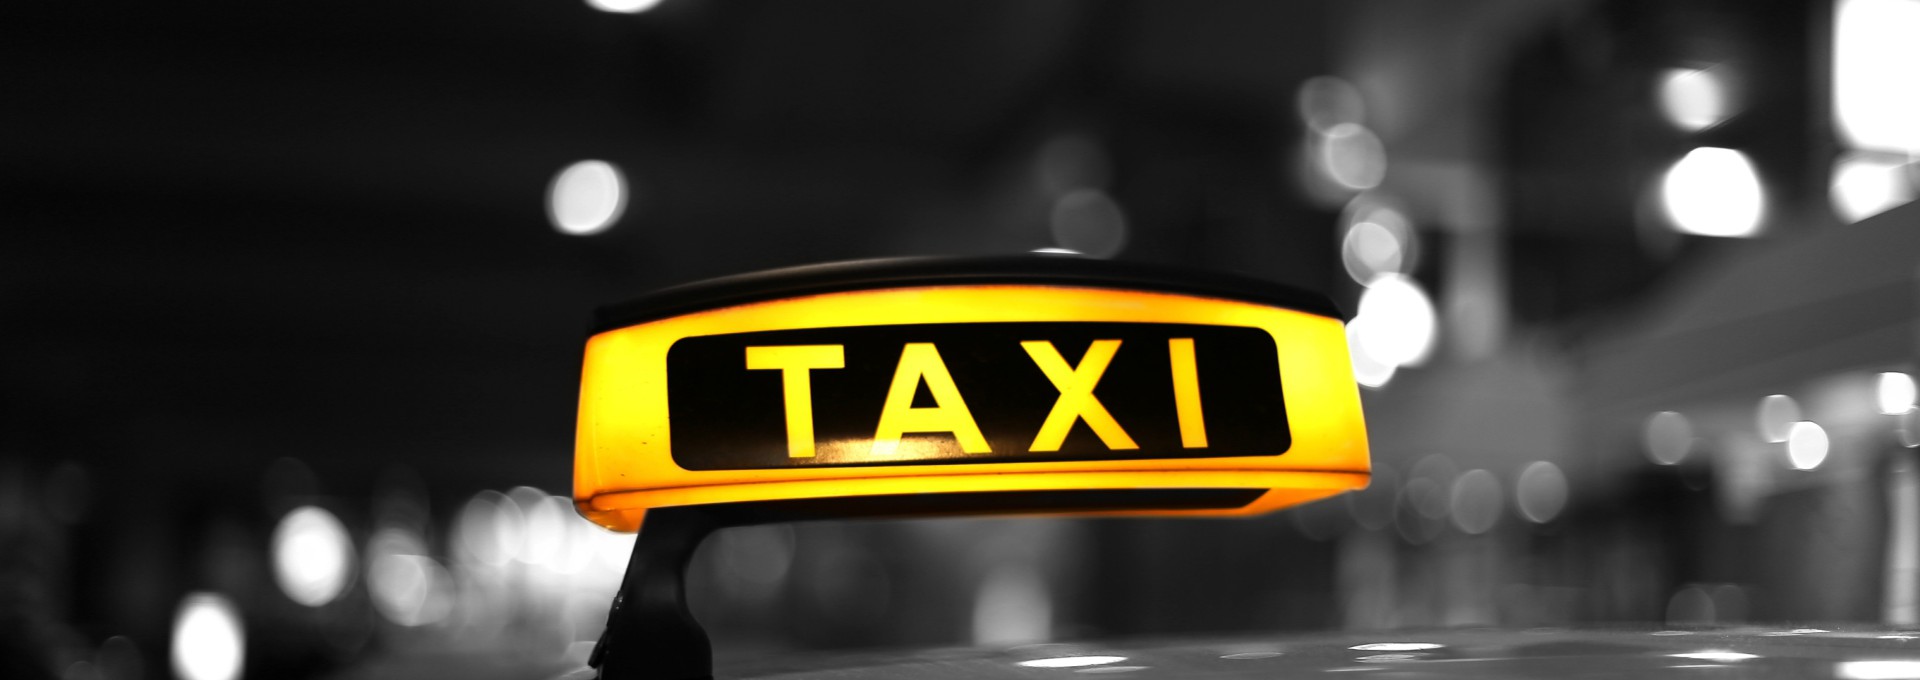 Таксист вконтакте. Такси фон. Такси обложка. Визитка такси. Обложка такси для ВК.